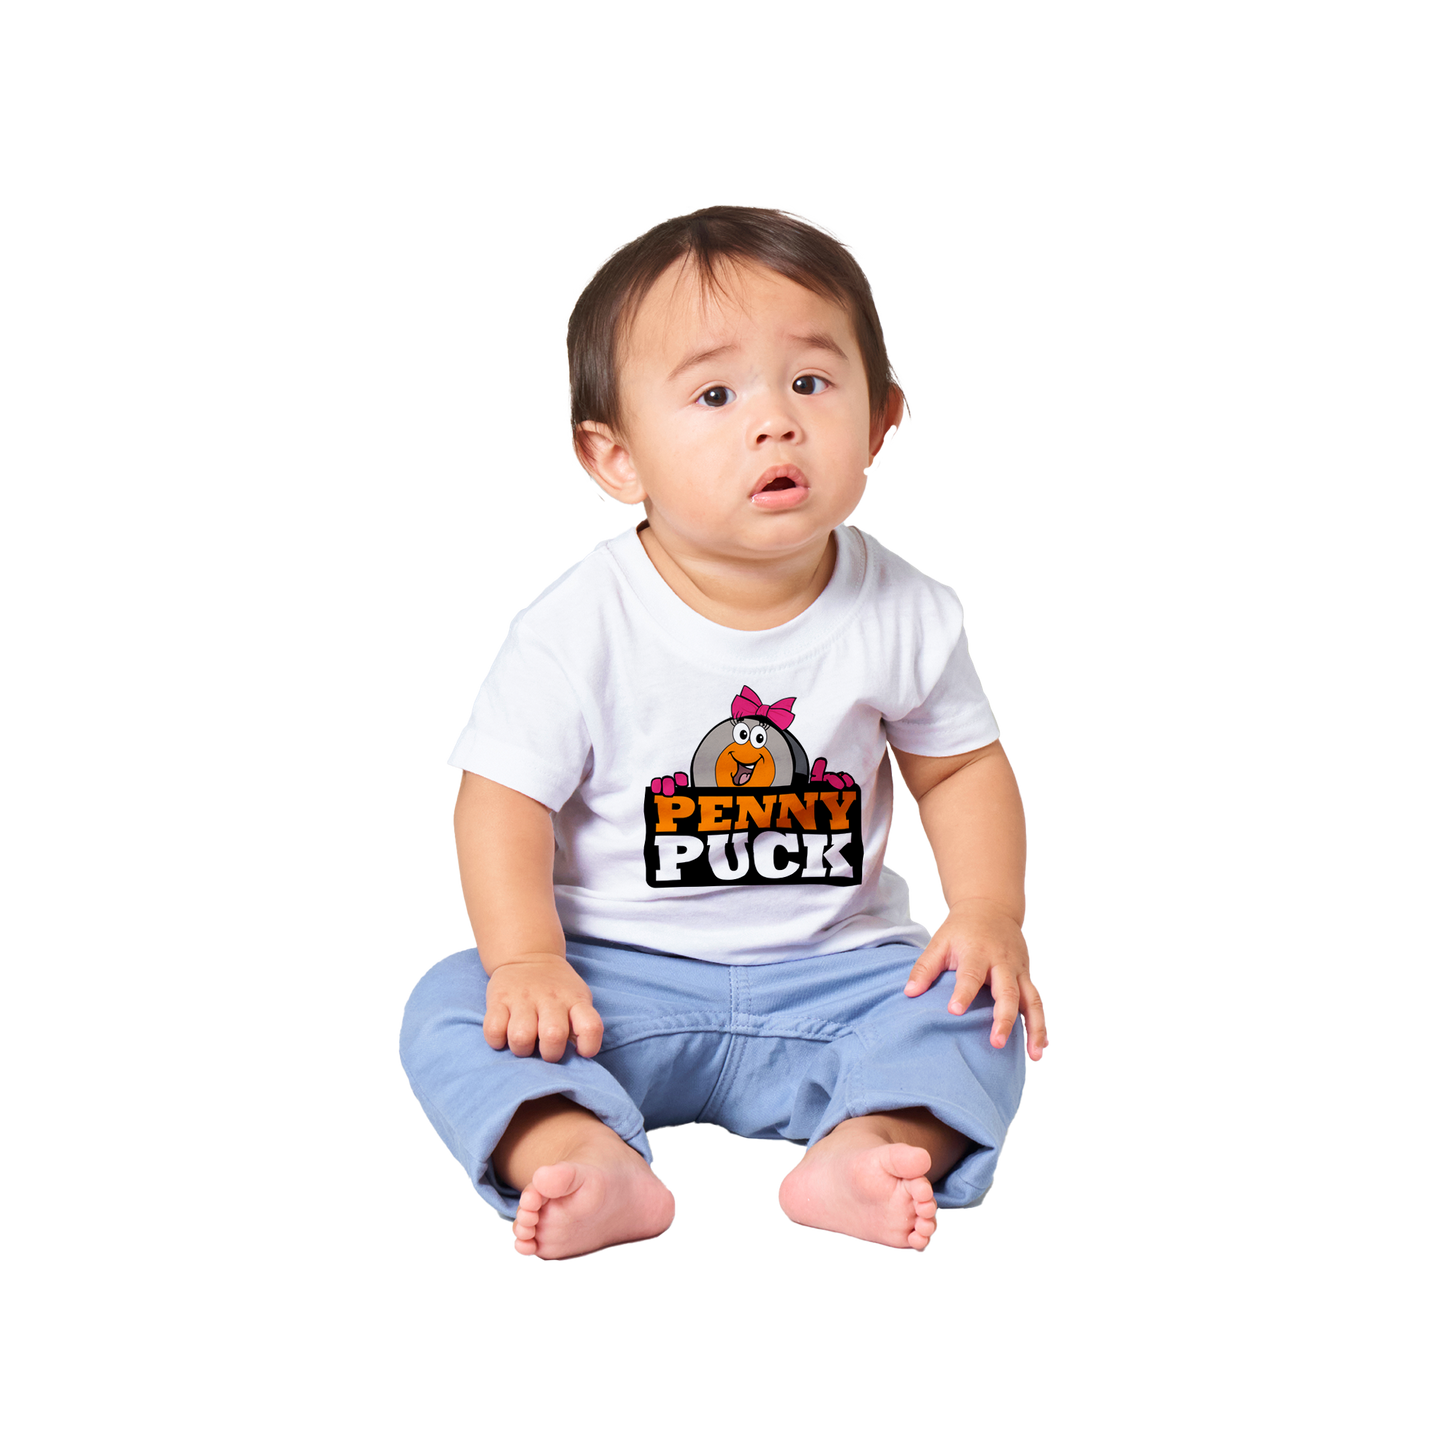 Penny Puck Peek Classic Baby Crewneck T-shirt